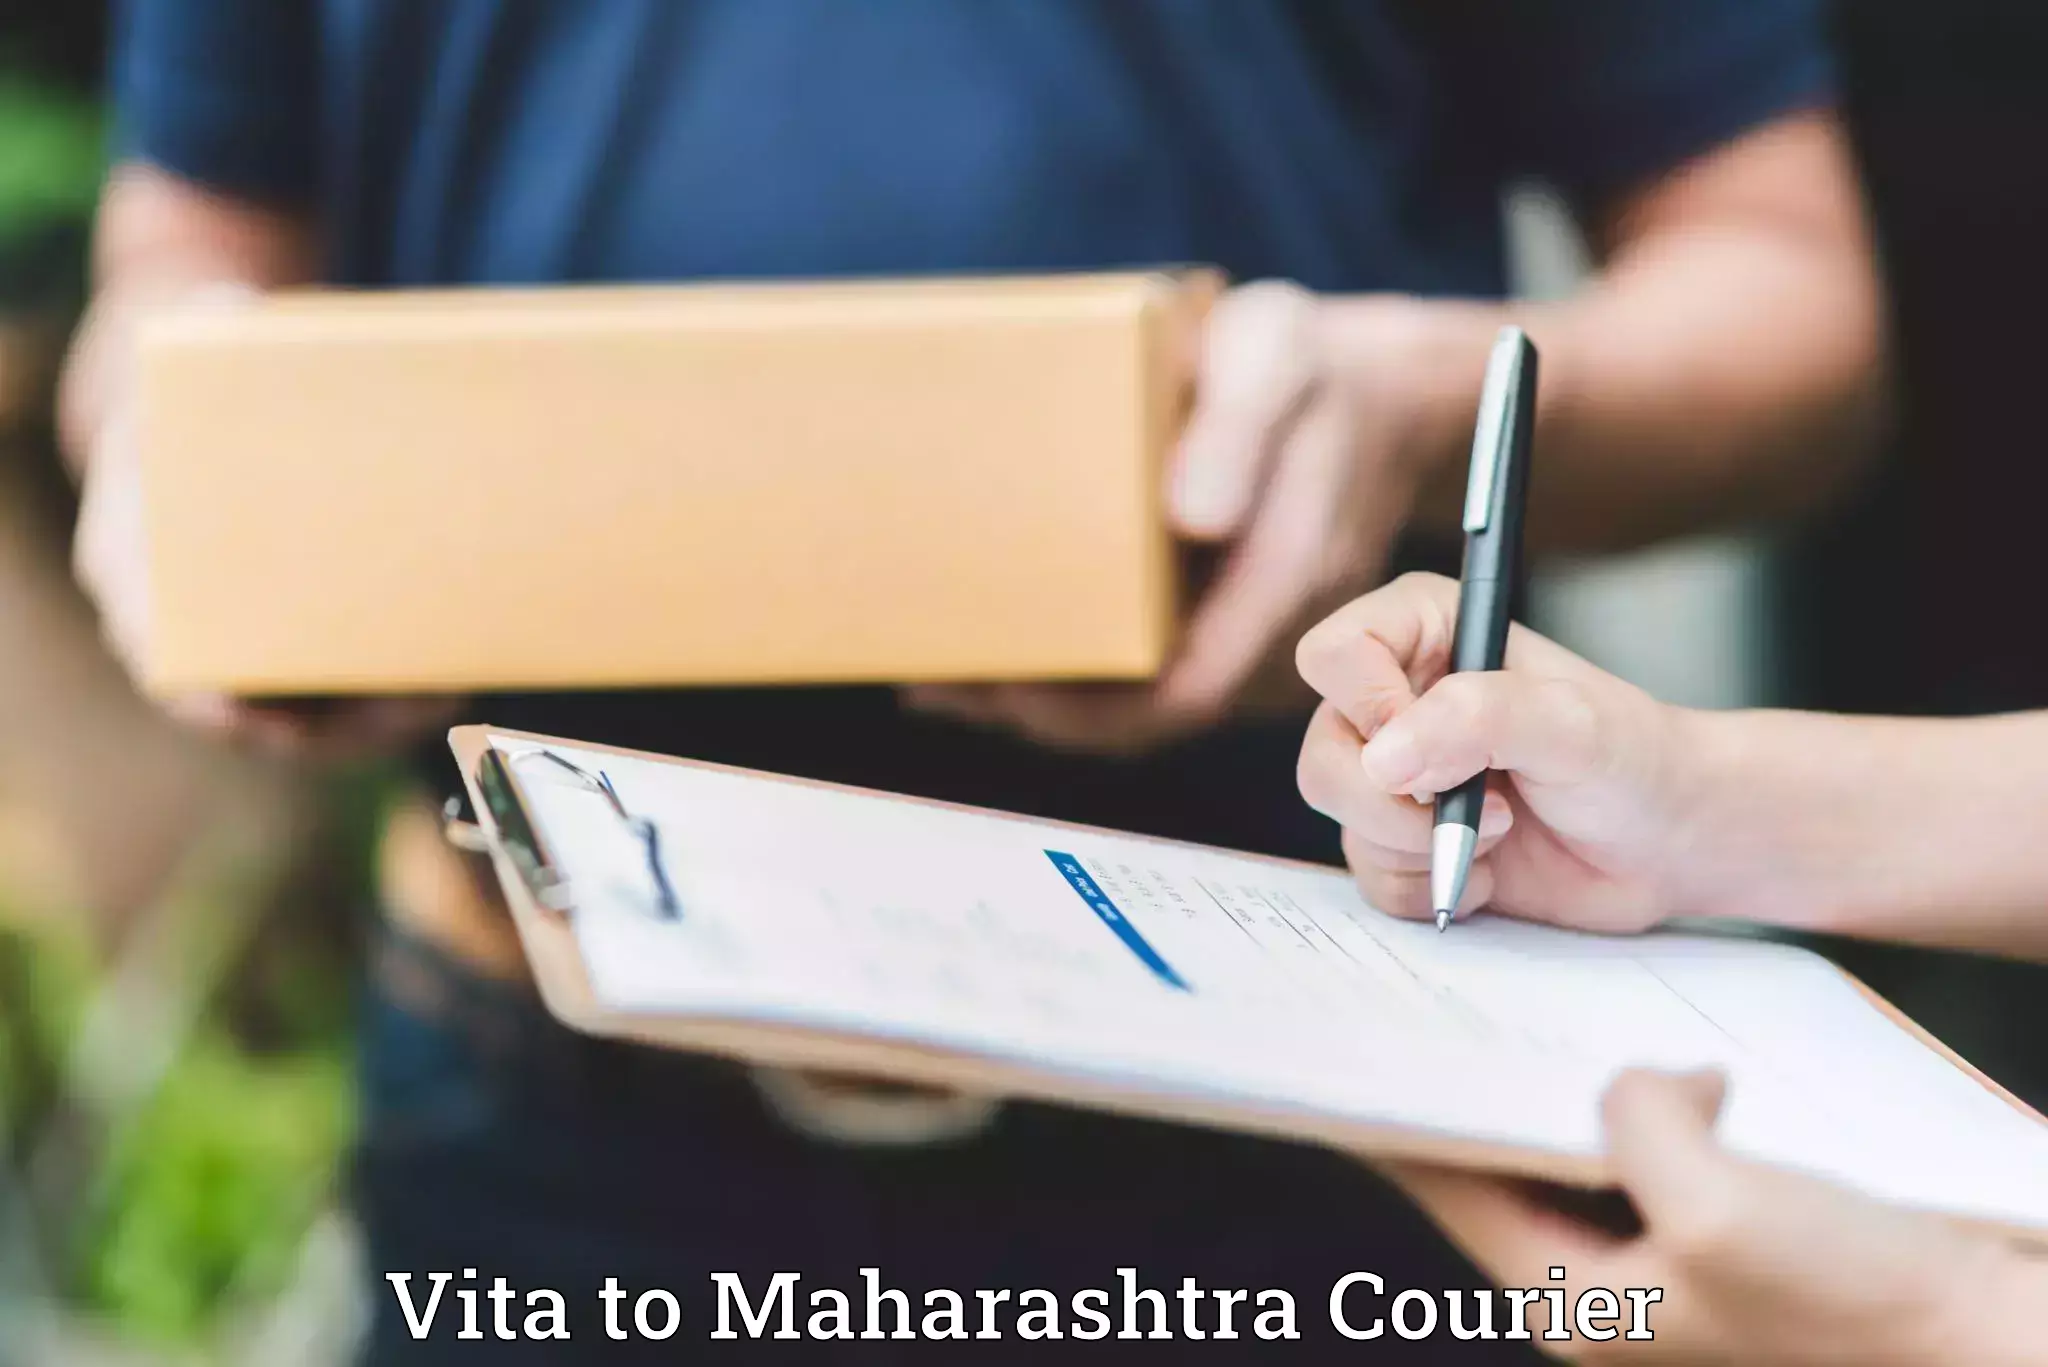 Luggage shipment specialists Vita to Maharashtra